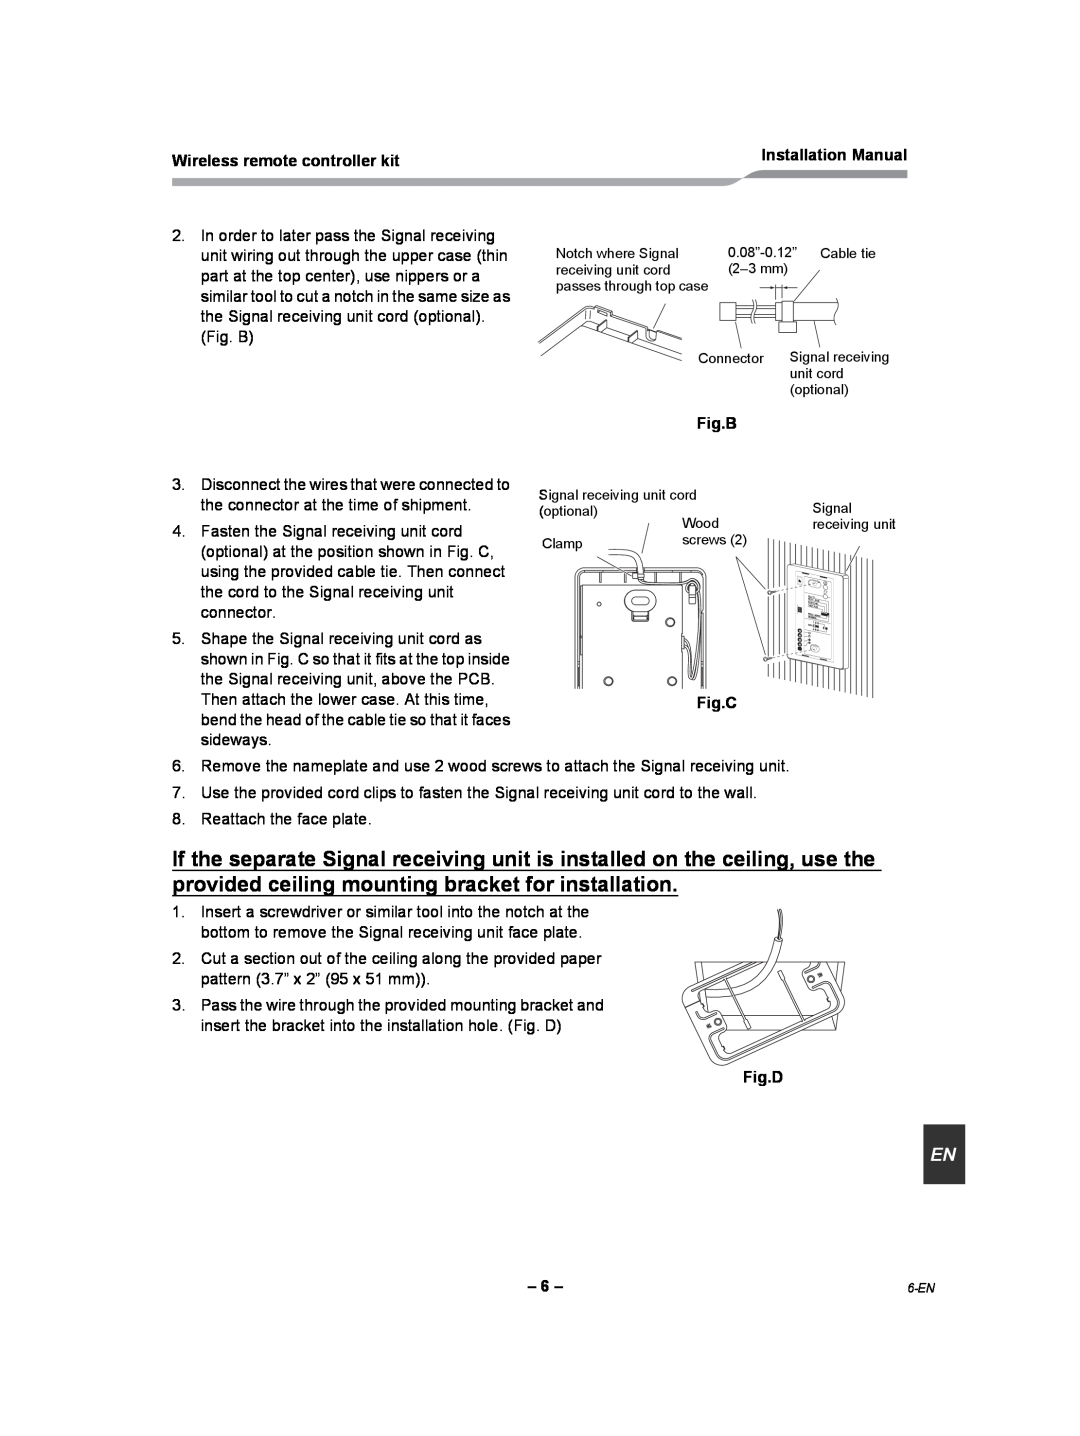 Toshiba TCB-AX21UL installation manual Wireless remote controller kit, Installation Manual, Fig.B, Fig.C, Fig.D 